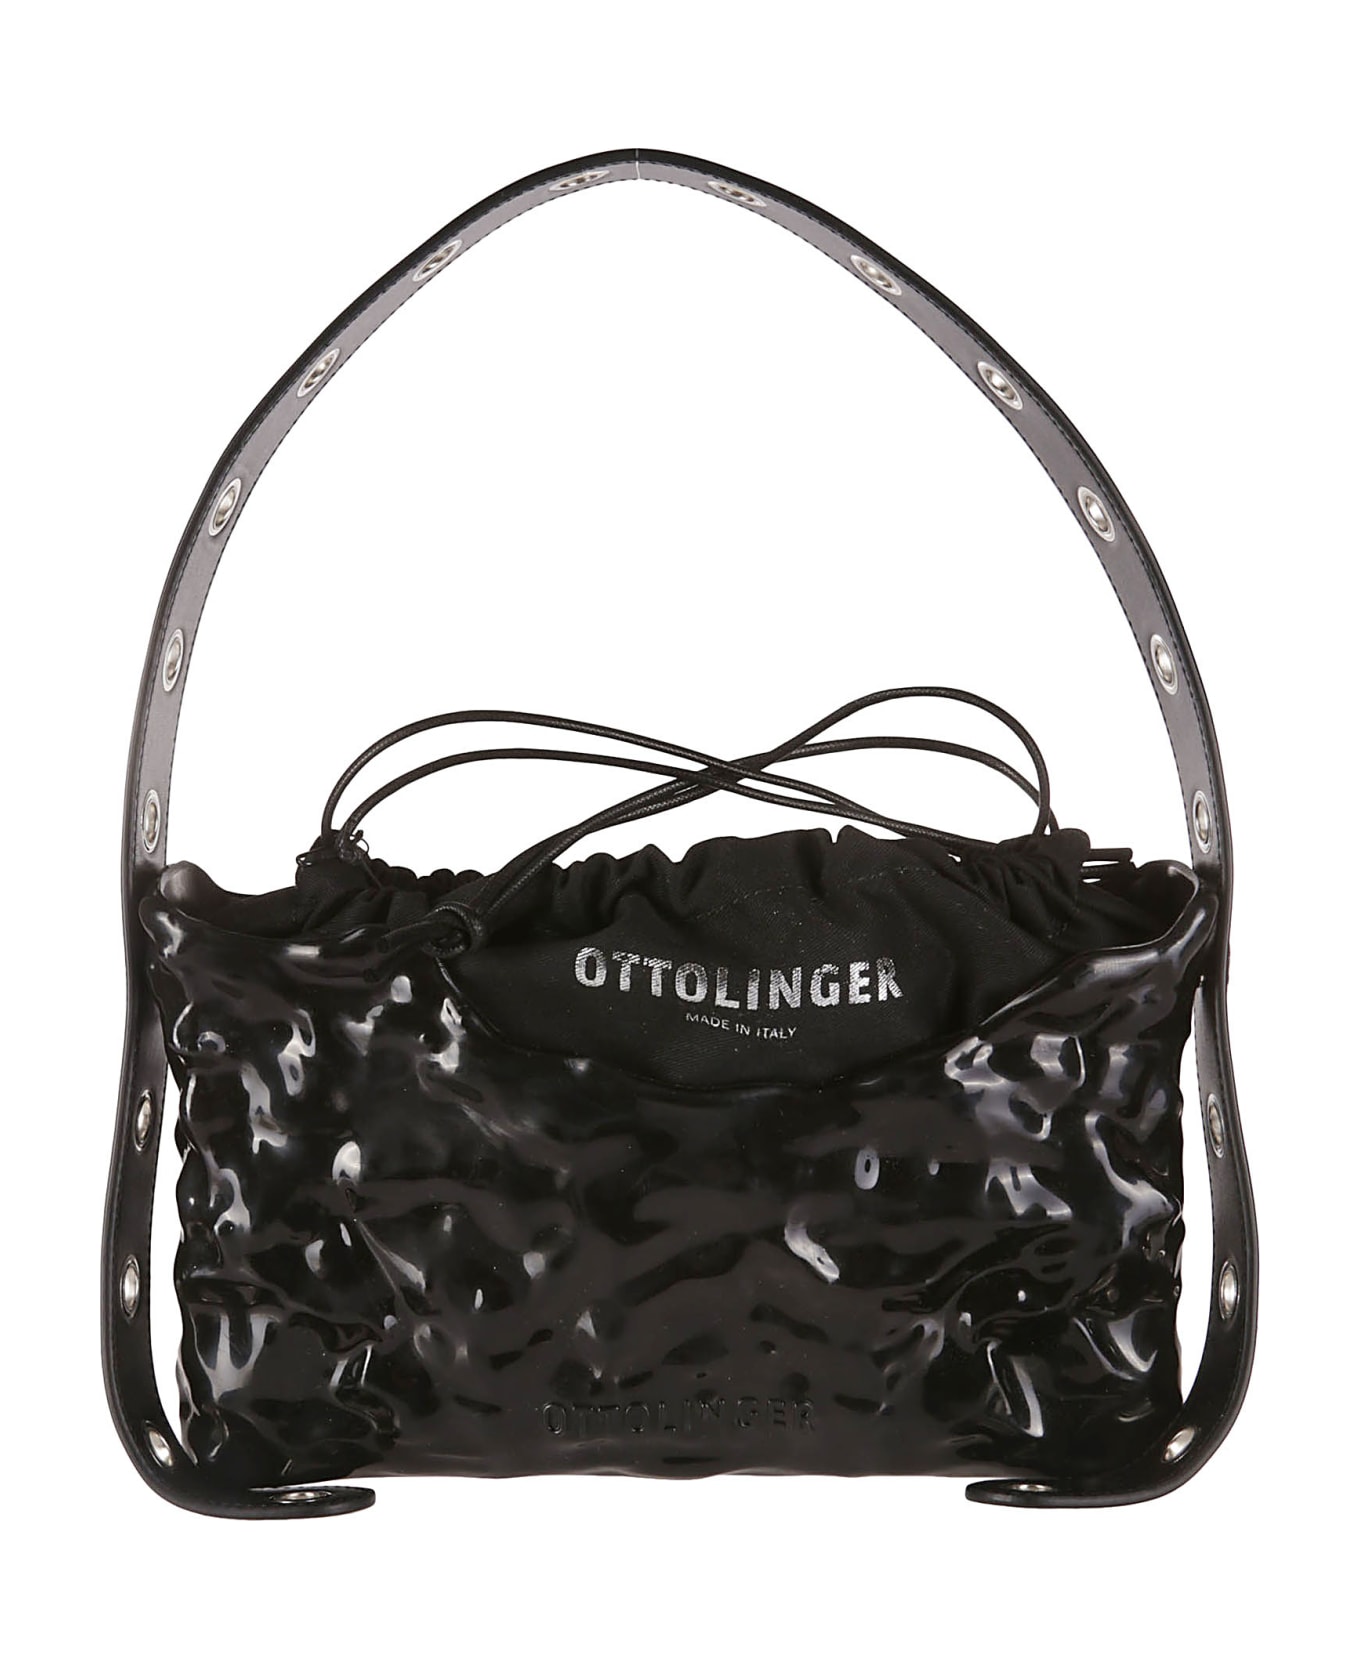 Ottolinger Signature Baguette Bag - BLACK